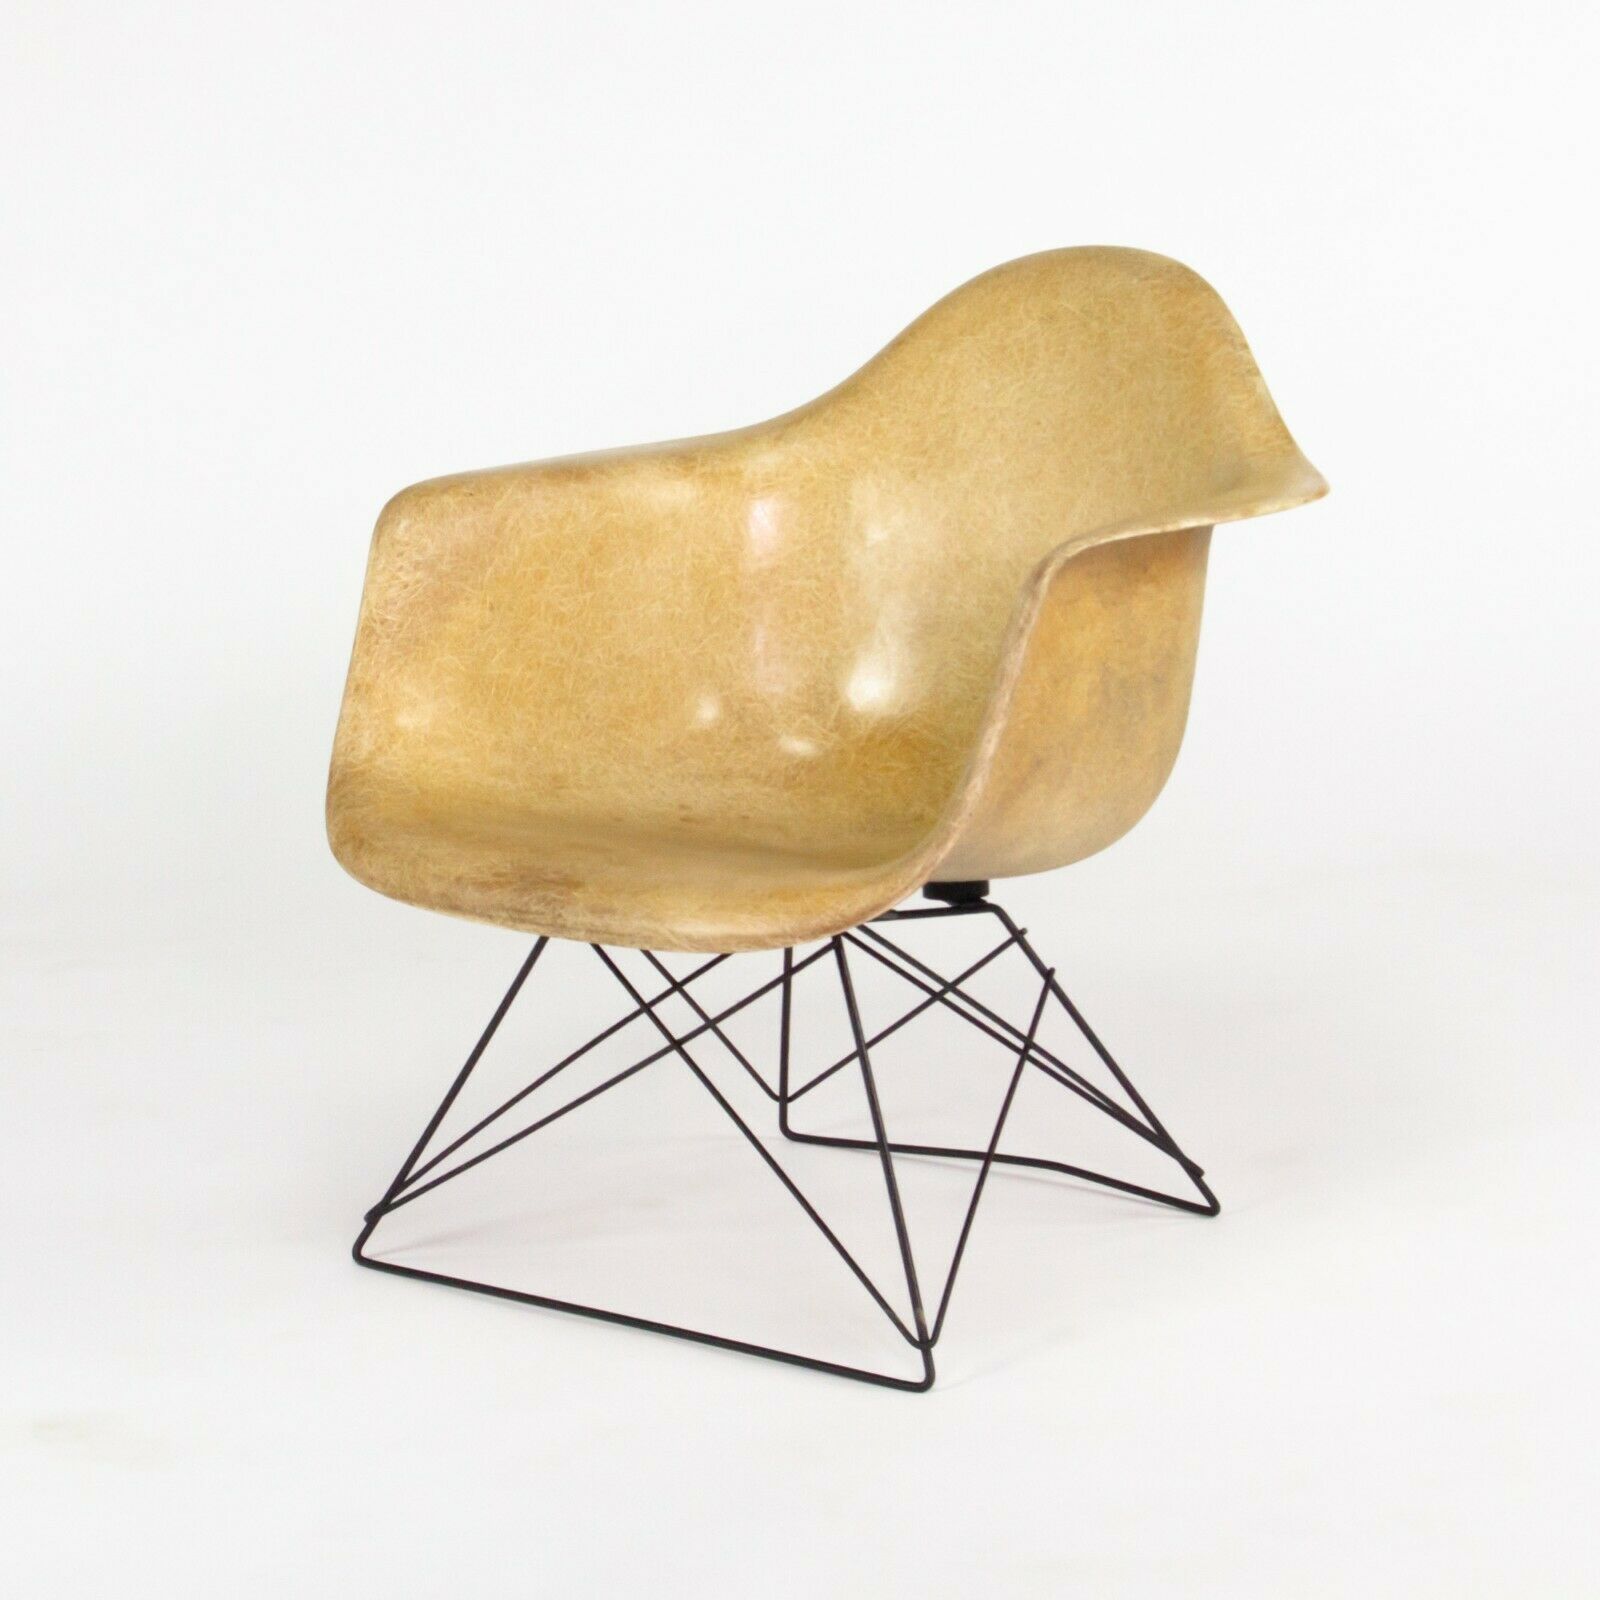 SOLD 1954 Herman Miller Eames Fiberglass LAR Arm Shell Lounge Chair Cats Cradle Base